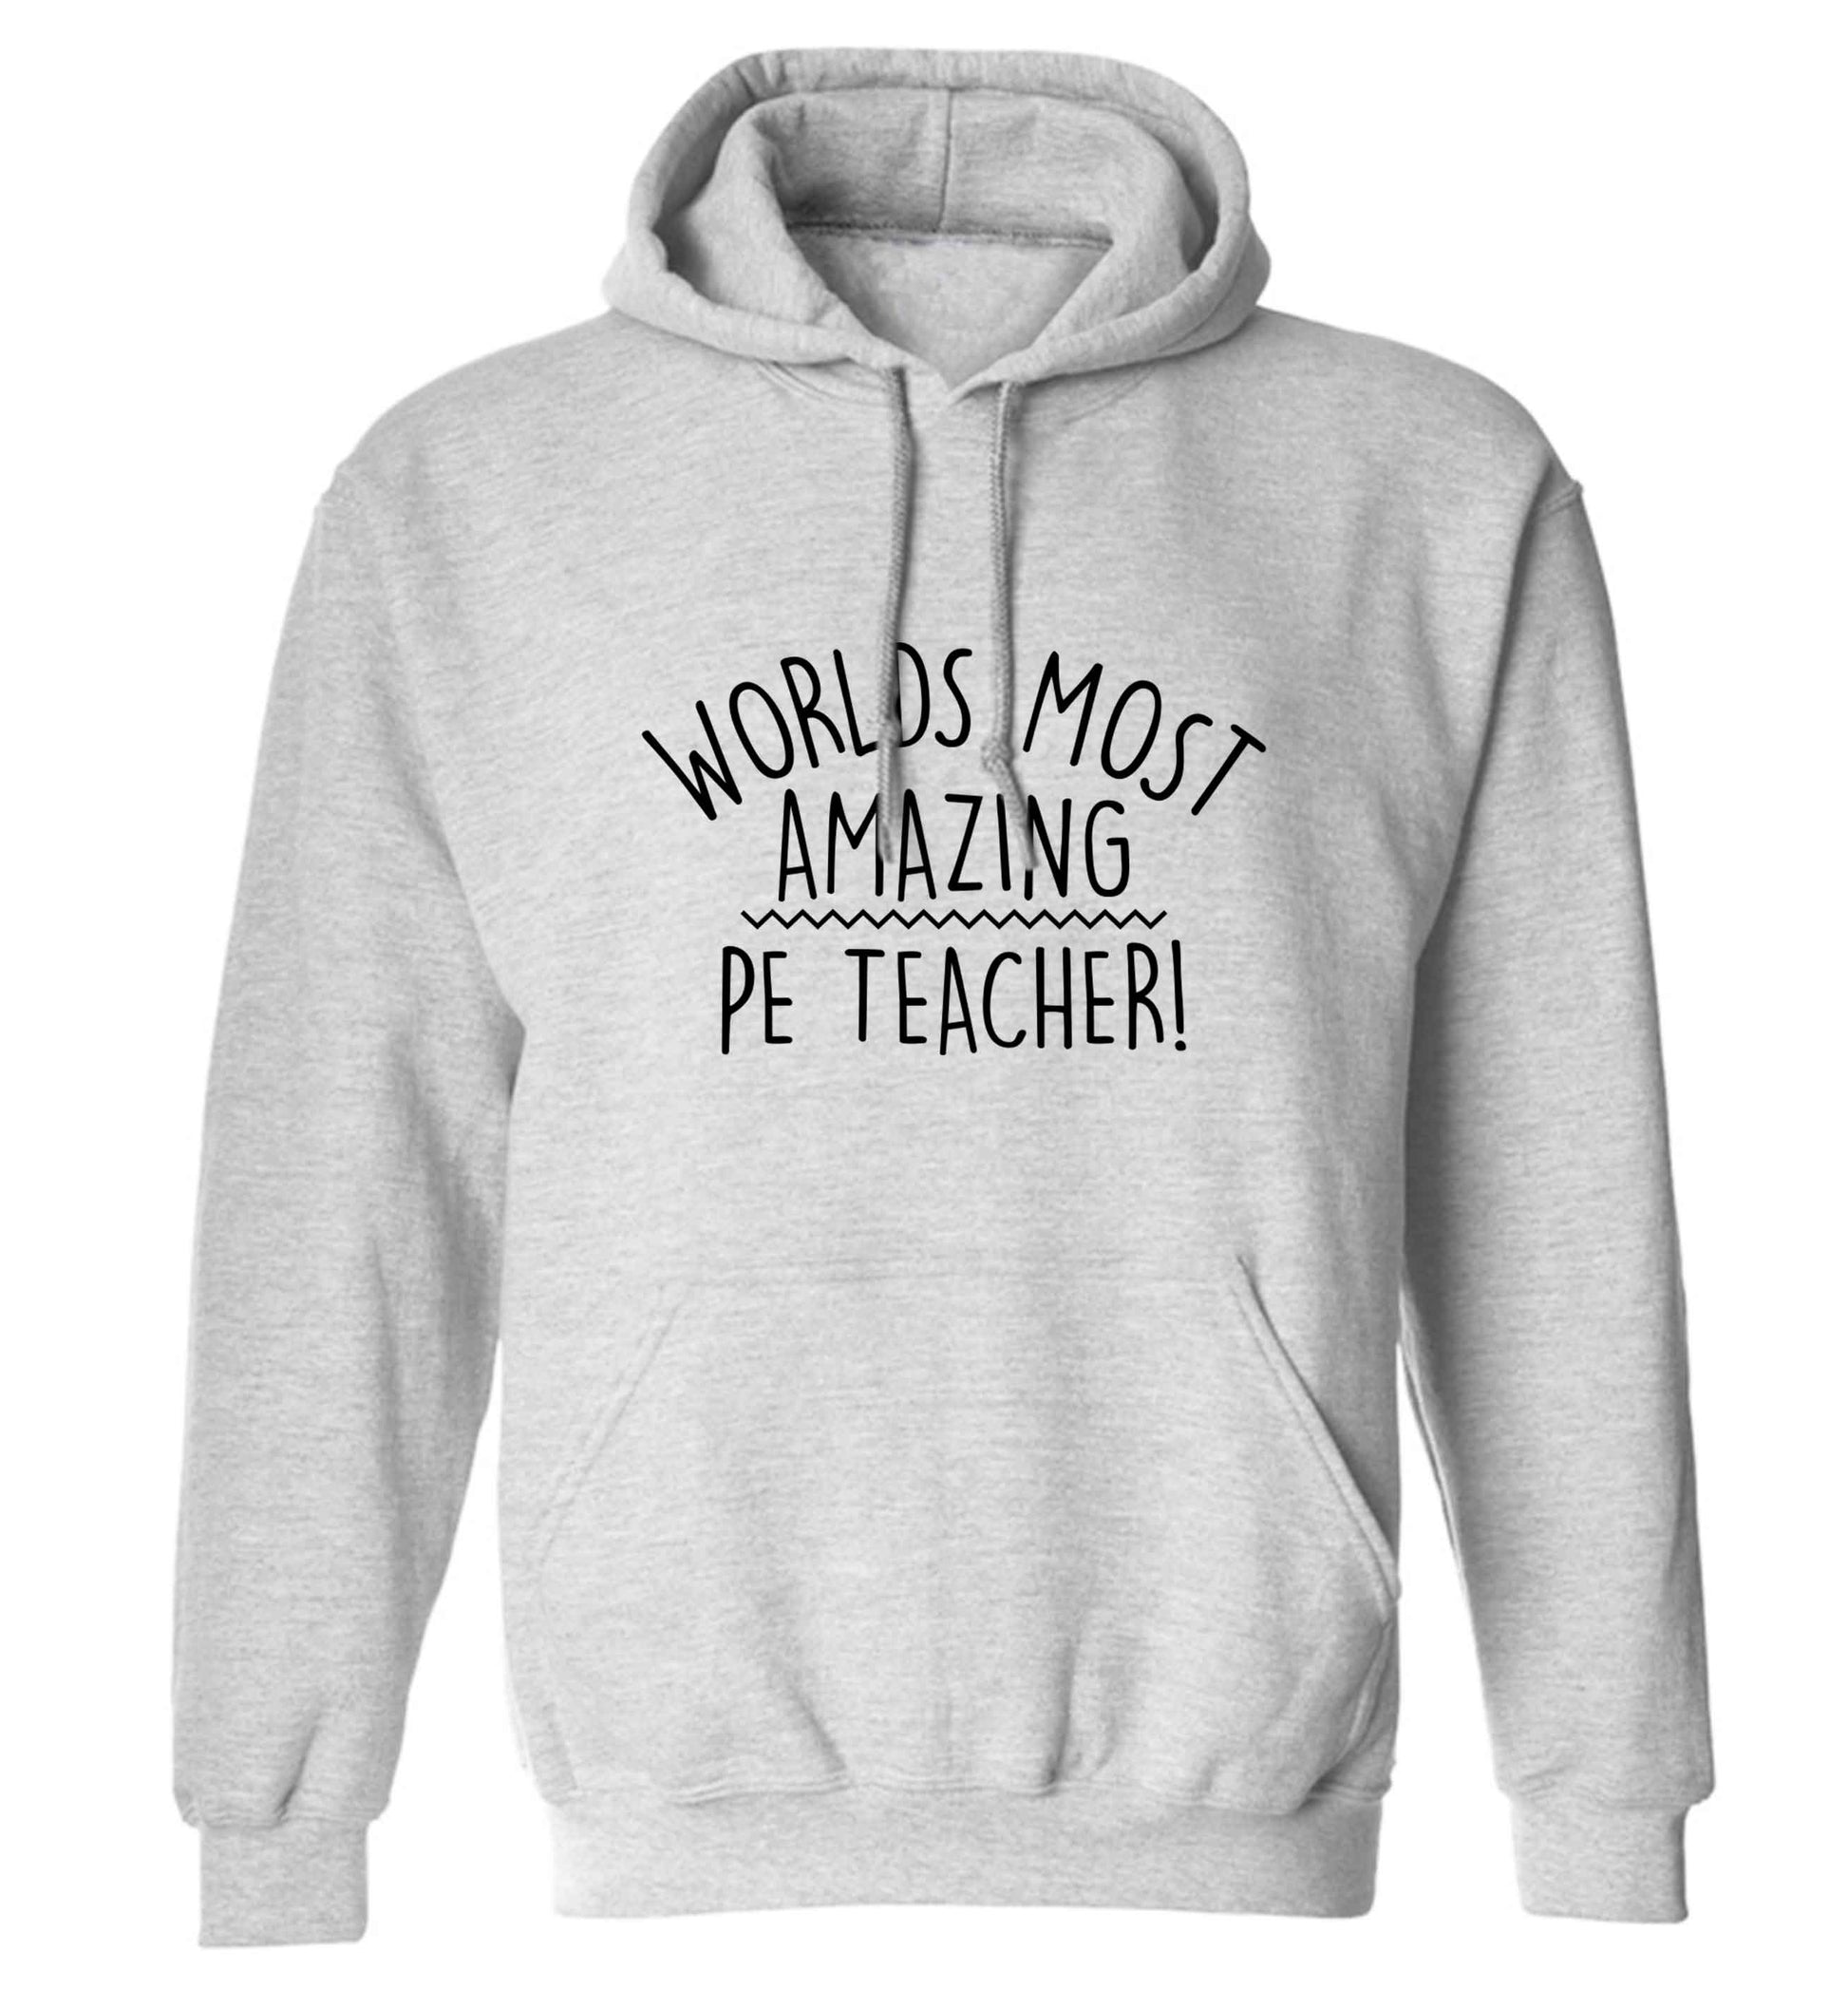 Worlds most amazing PE teacher adults unisex grey hoodie 2XL